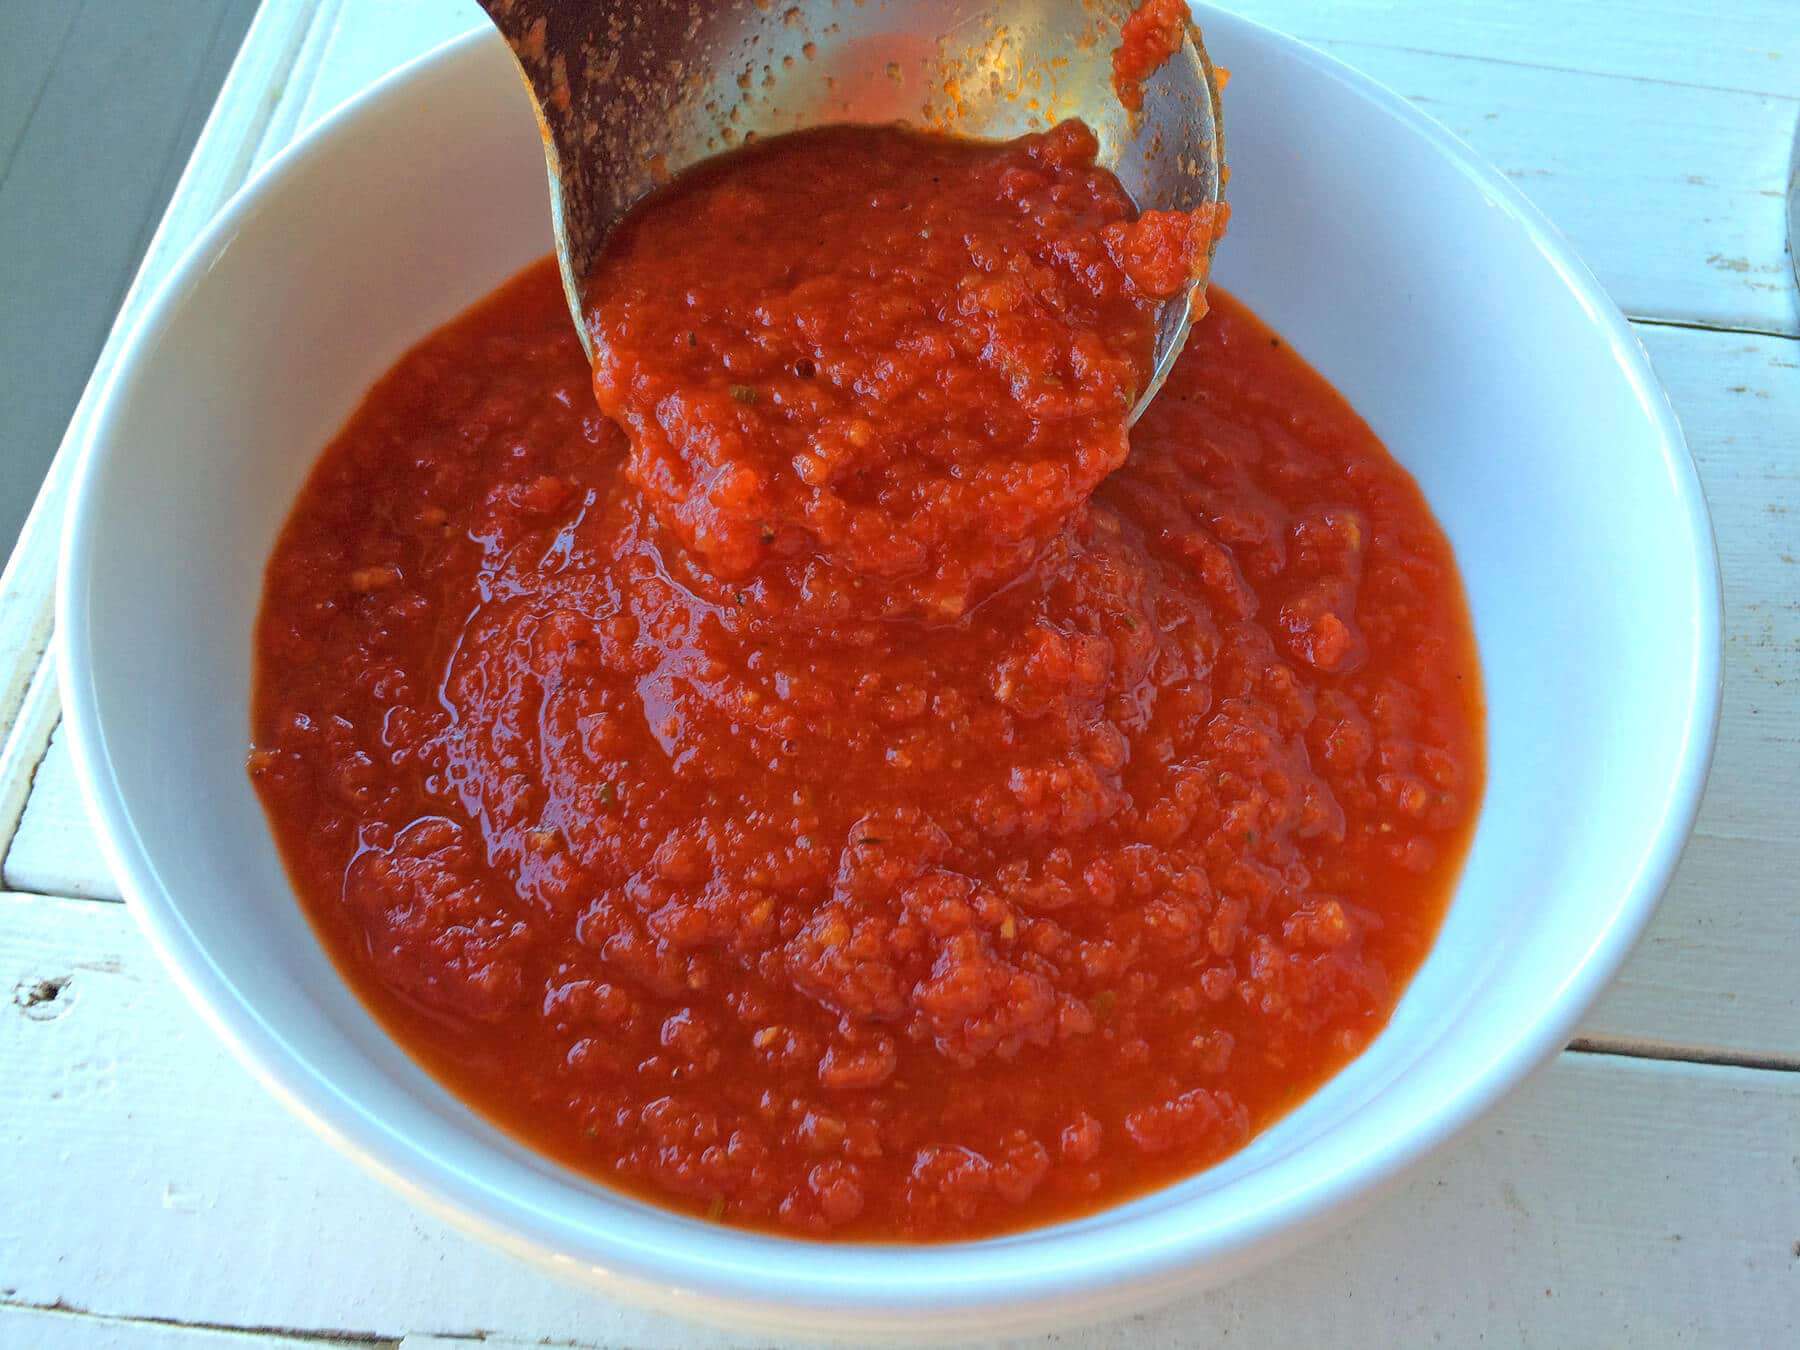 best marinara sauce recipe canning preserving tomato italian authentic traditional